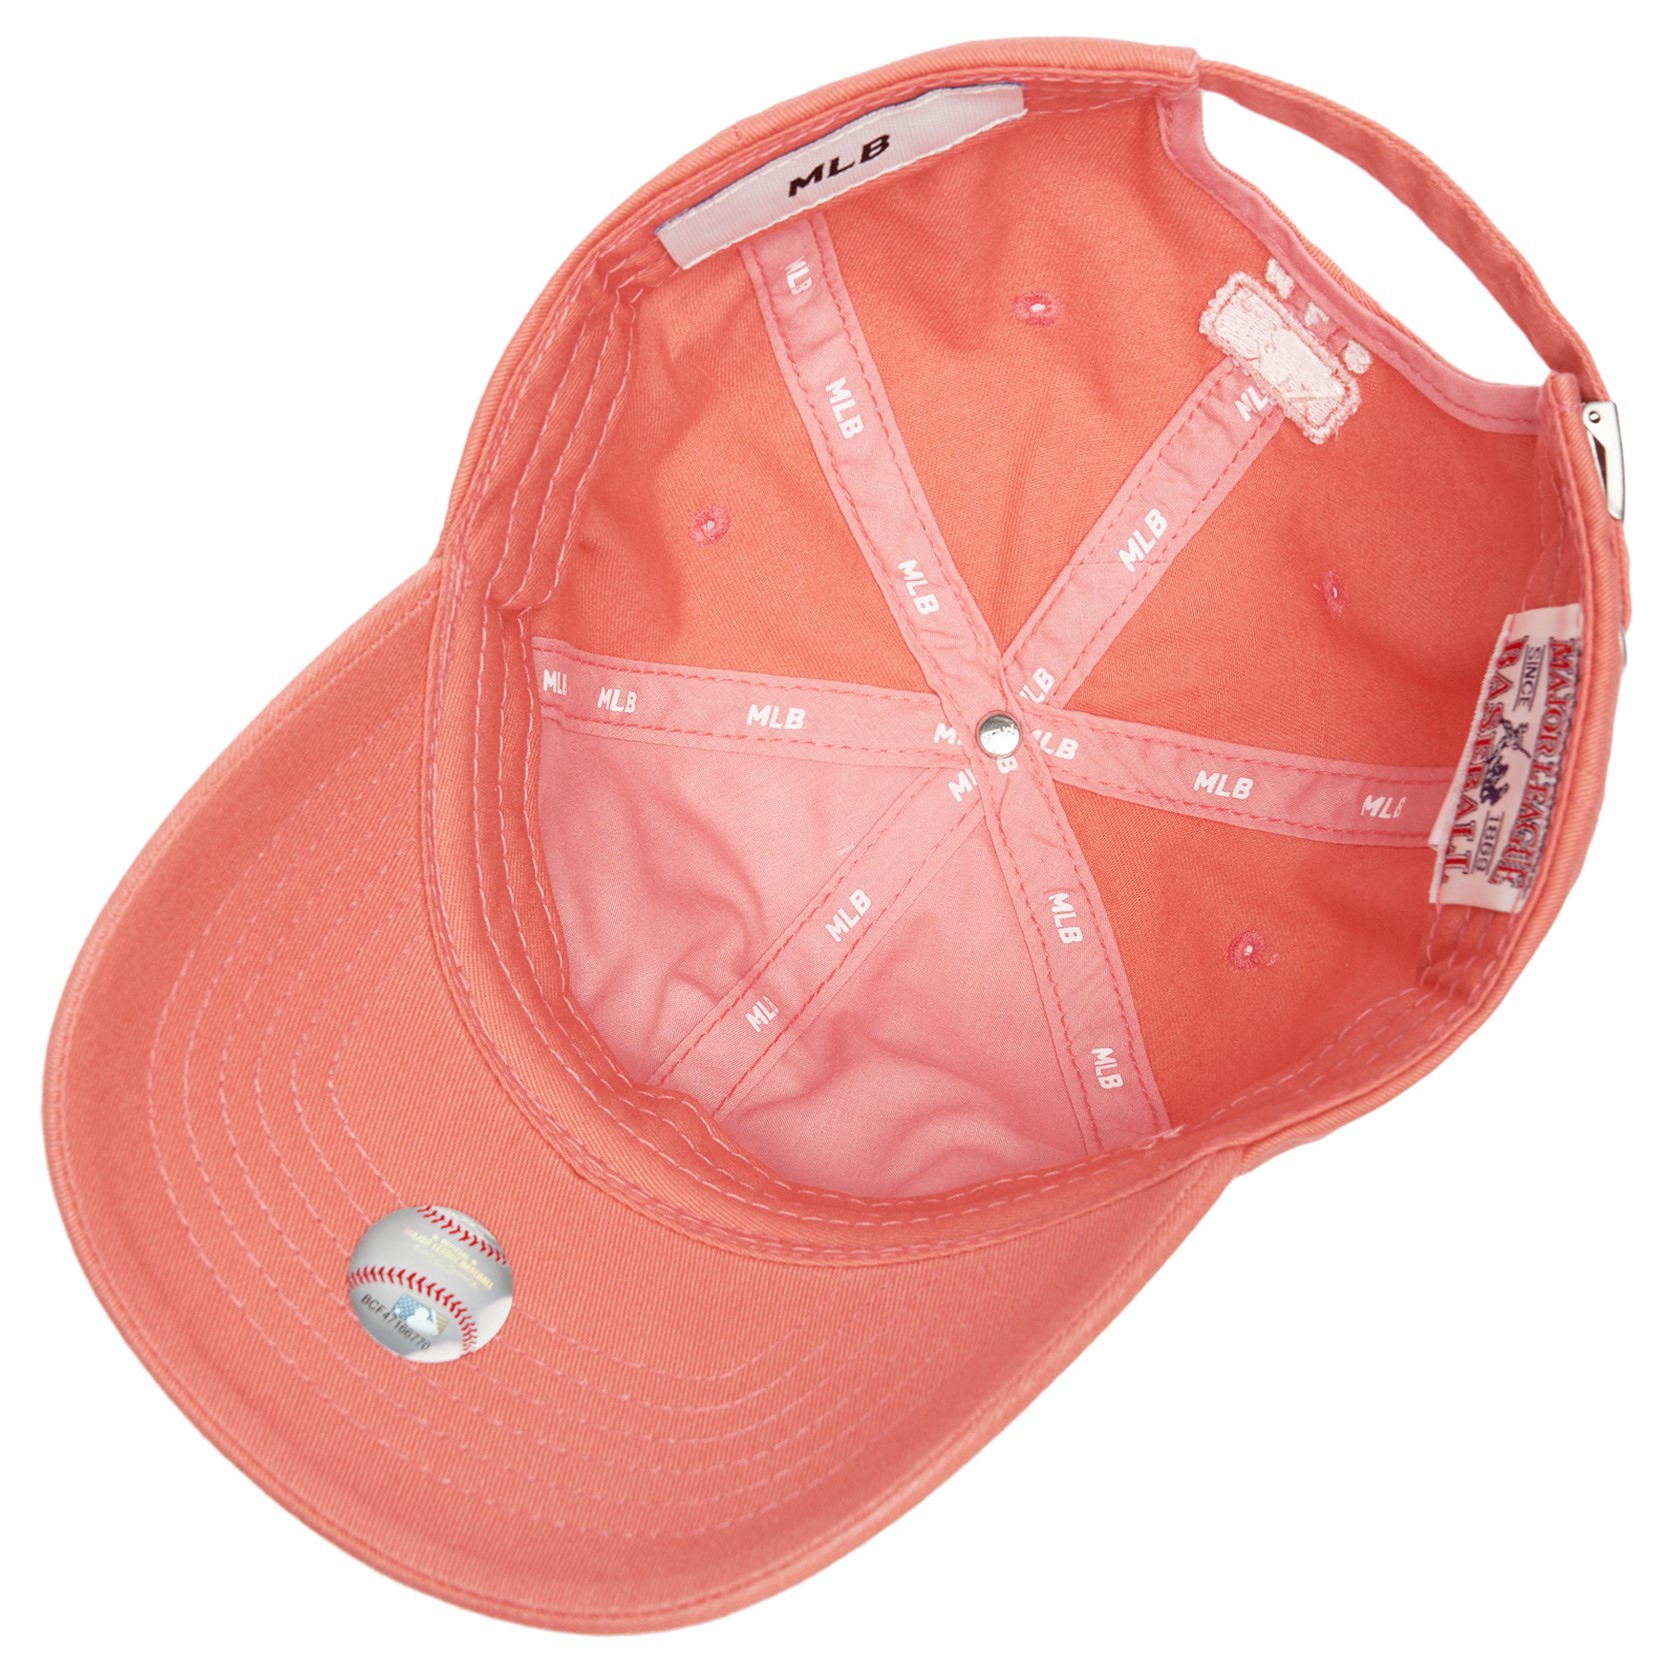 Chi tiết 60 về mũ MLB hồng mới nhất  cdgdbentreeduvn